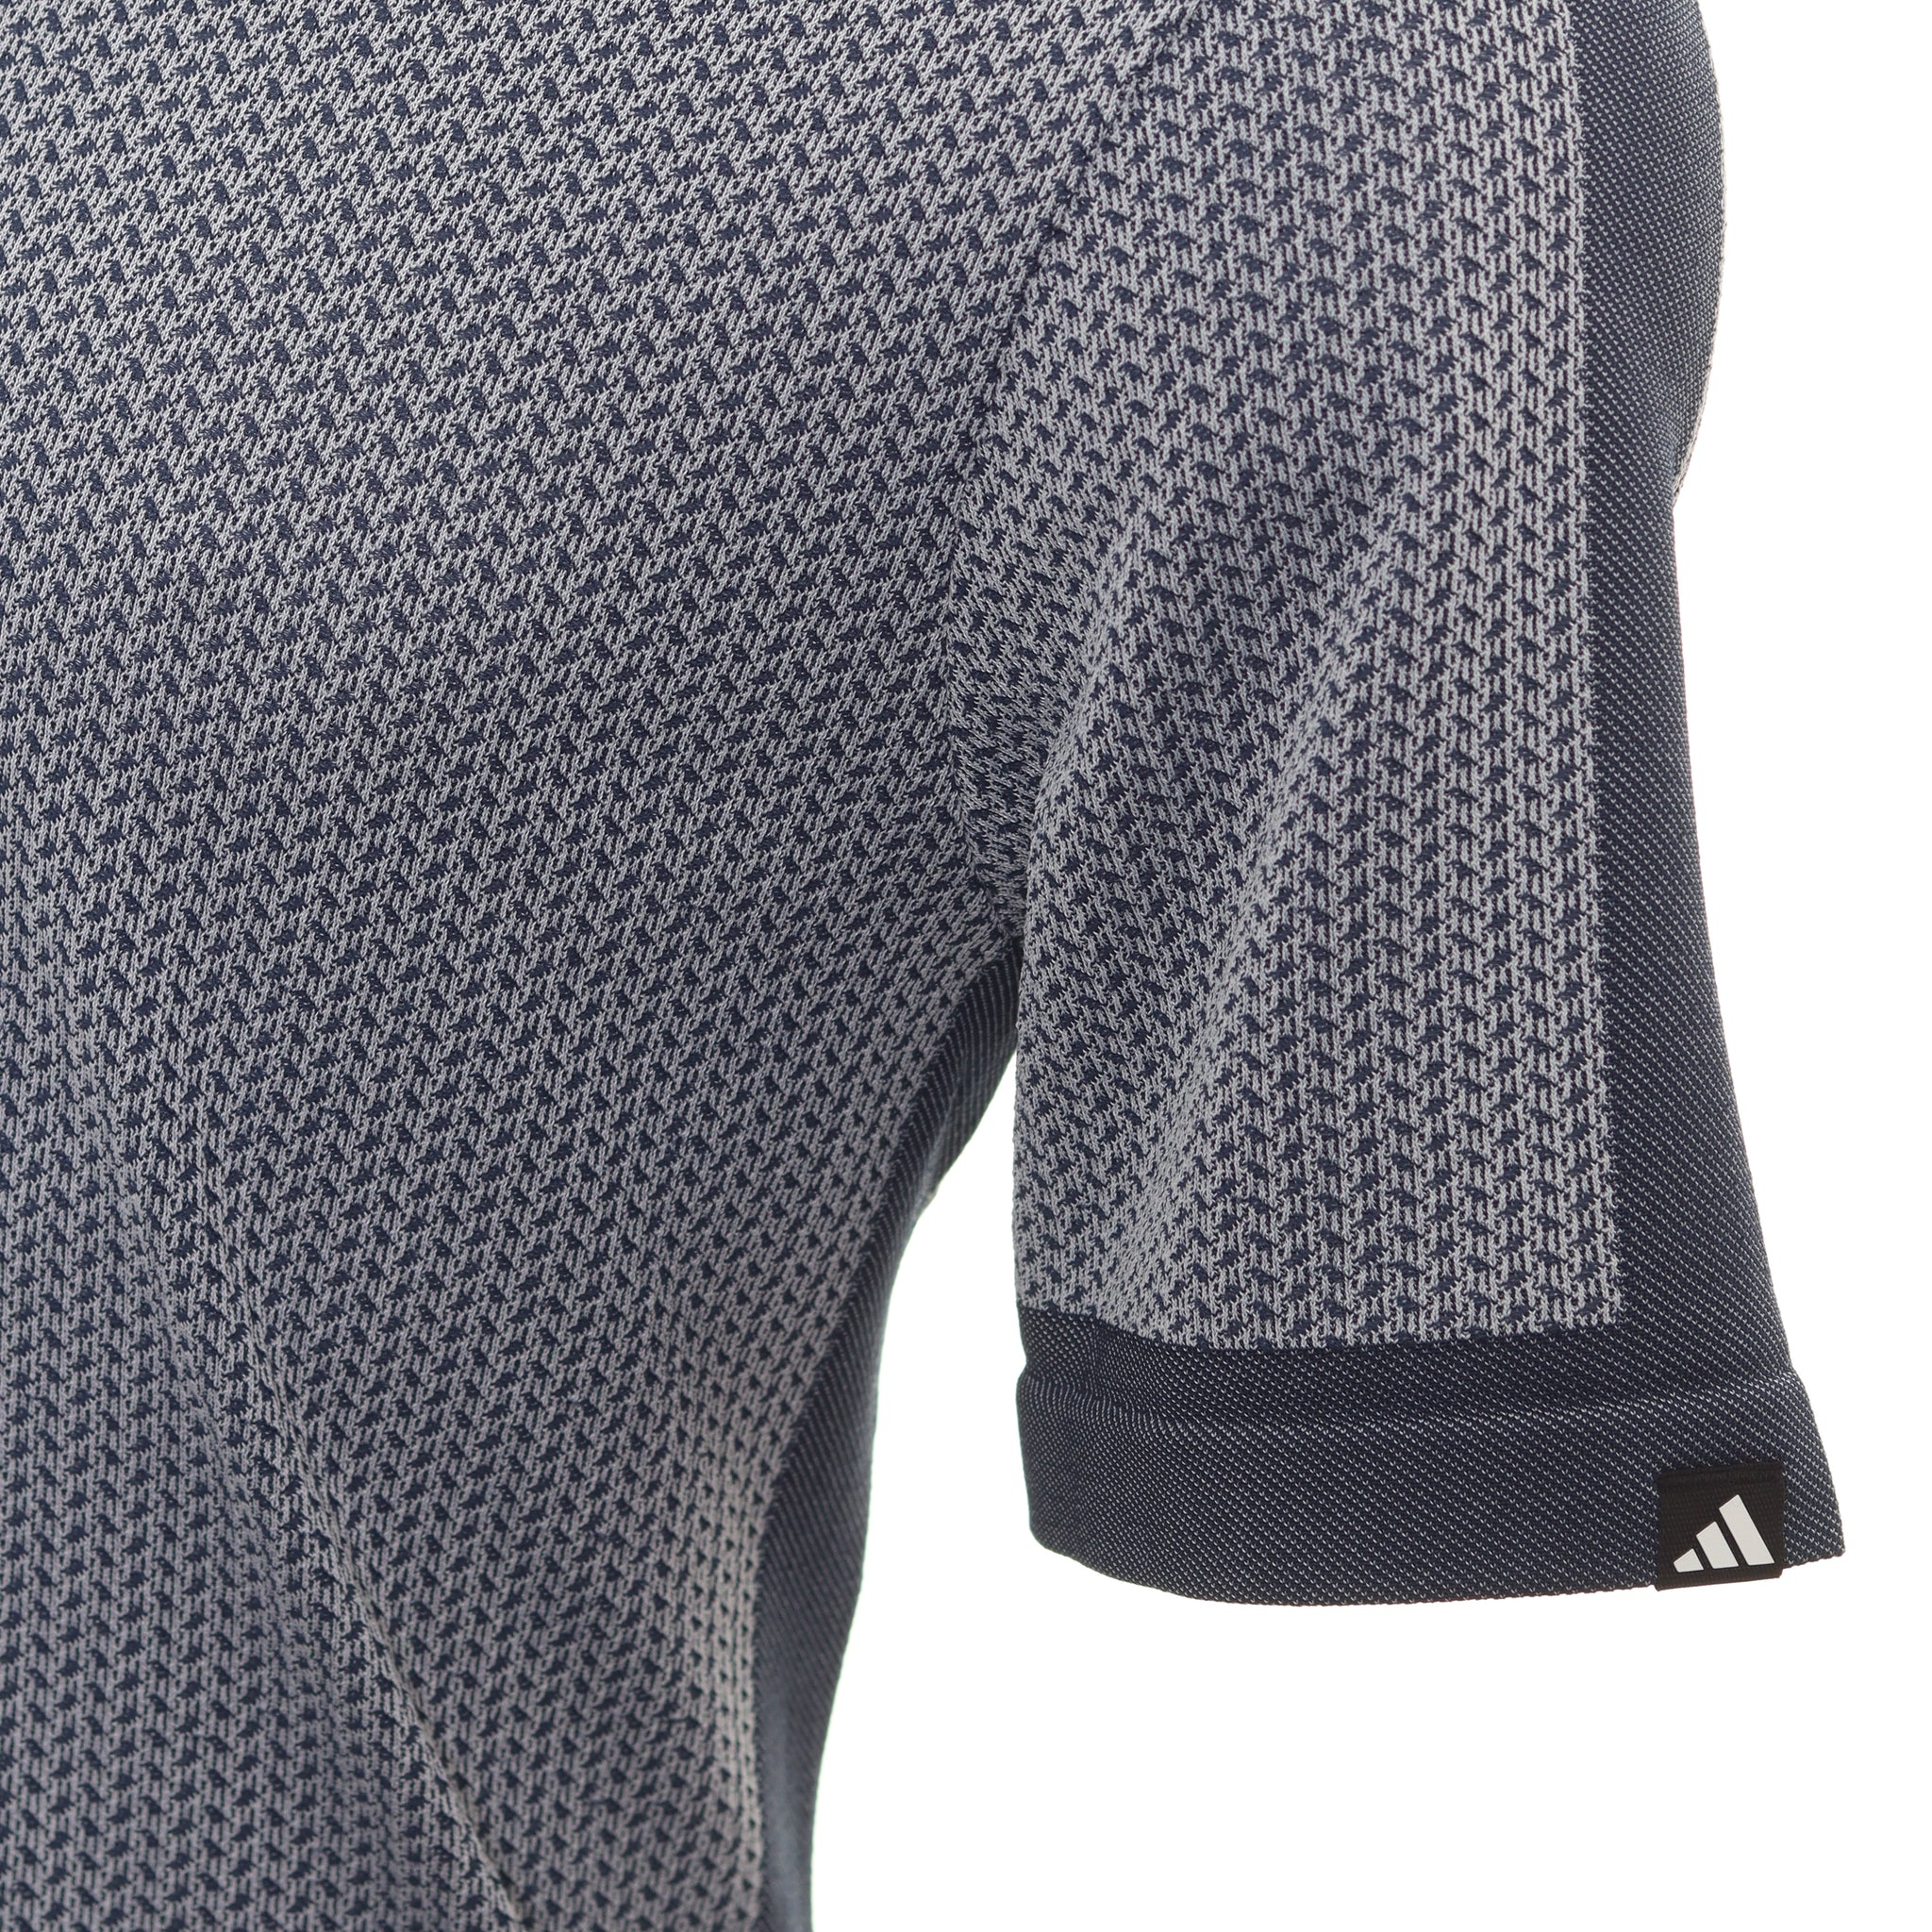 adidas Golf Textured Primeknit Shirt